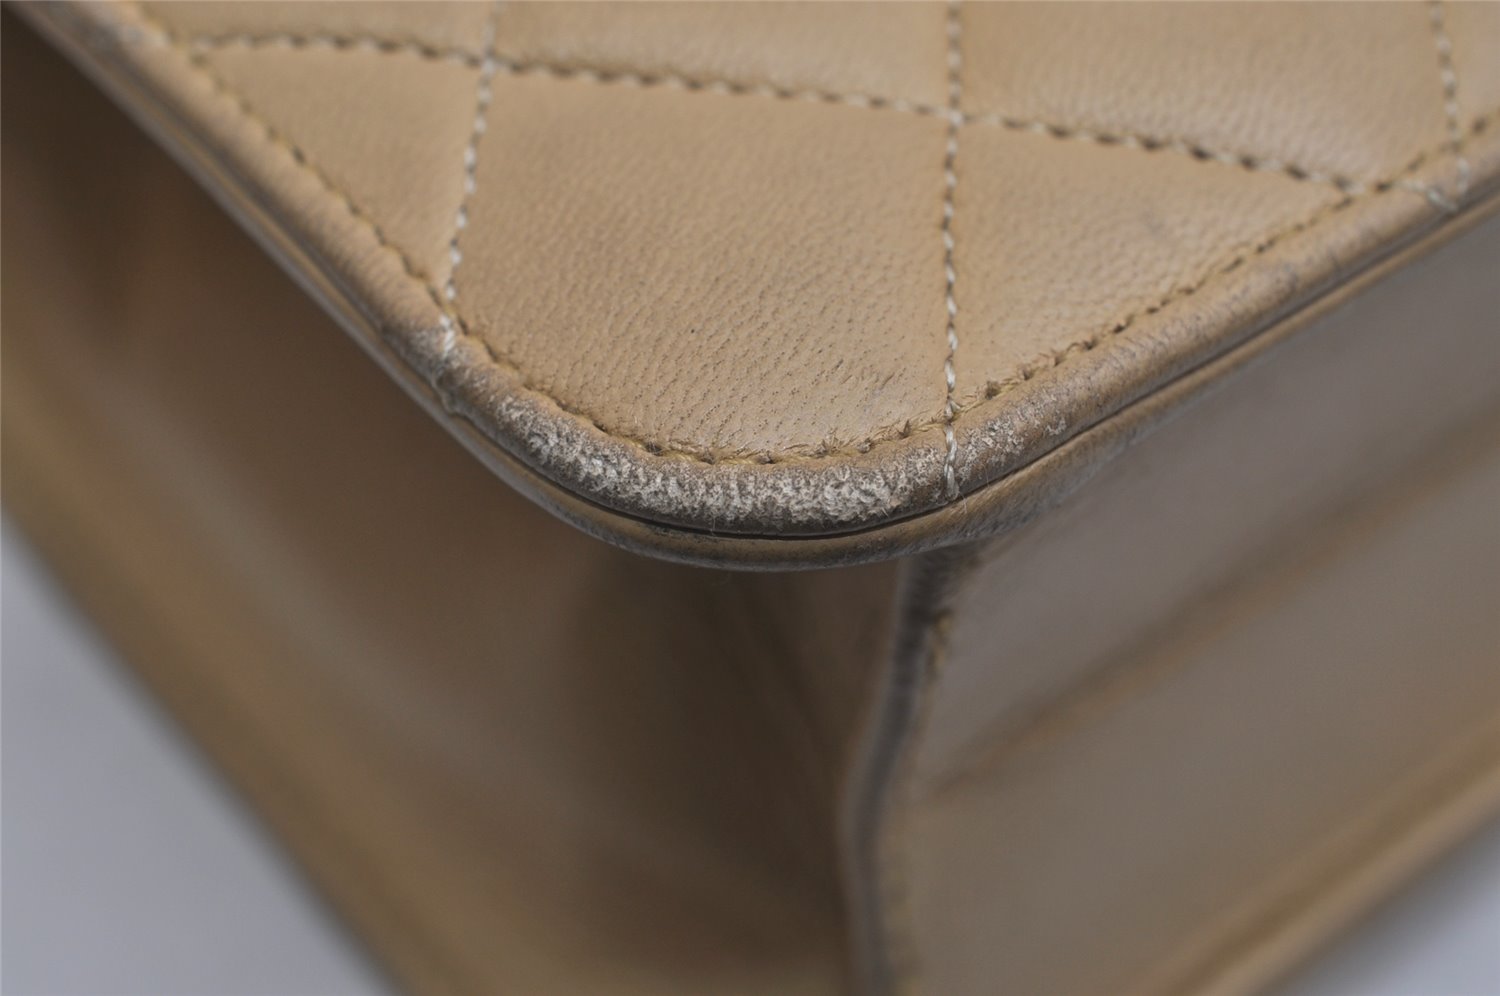 Authentic CHANEL Calf Skin Matelasse Chain Shoulder Cross Bag Beige CC Box 9899J